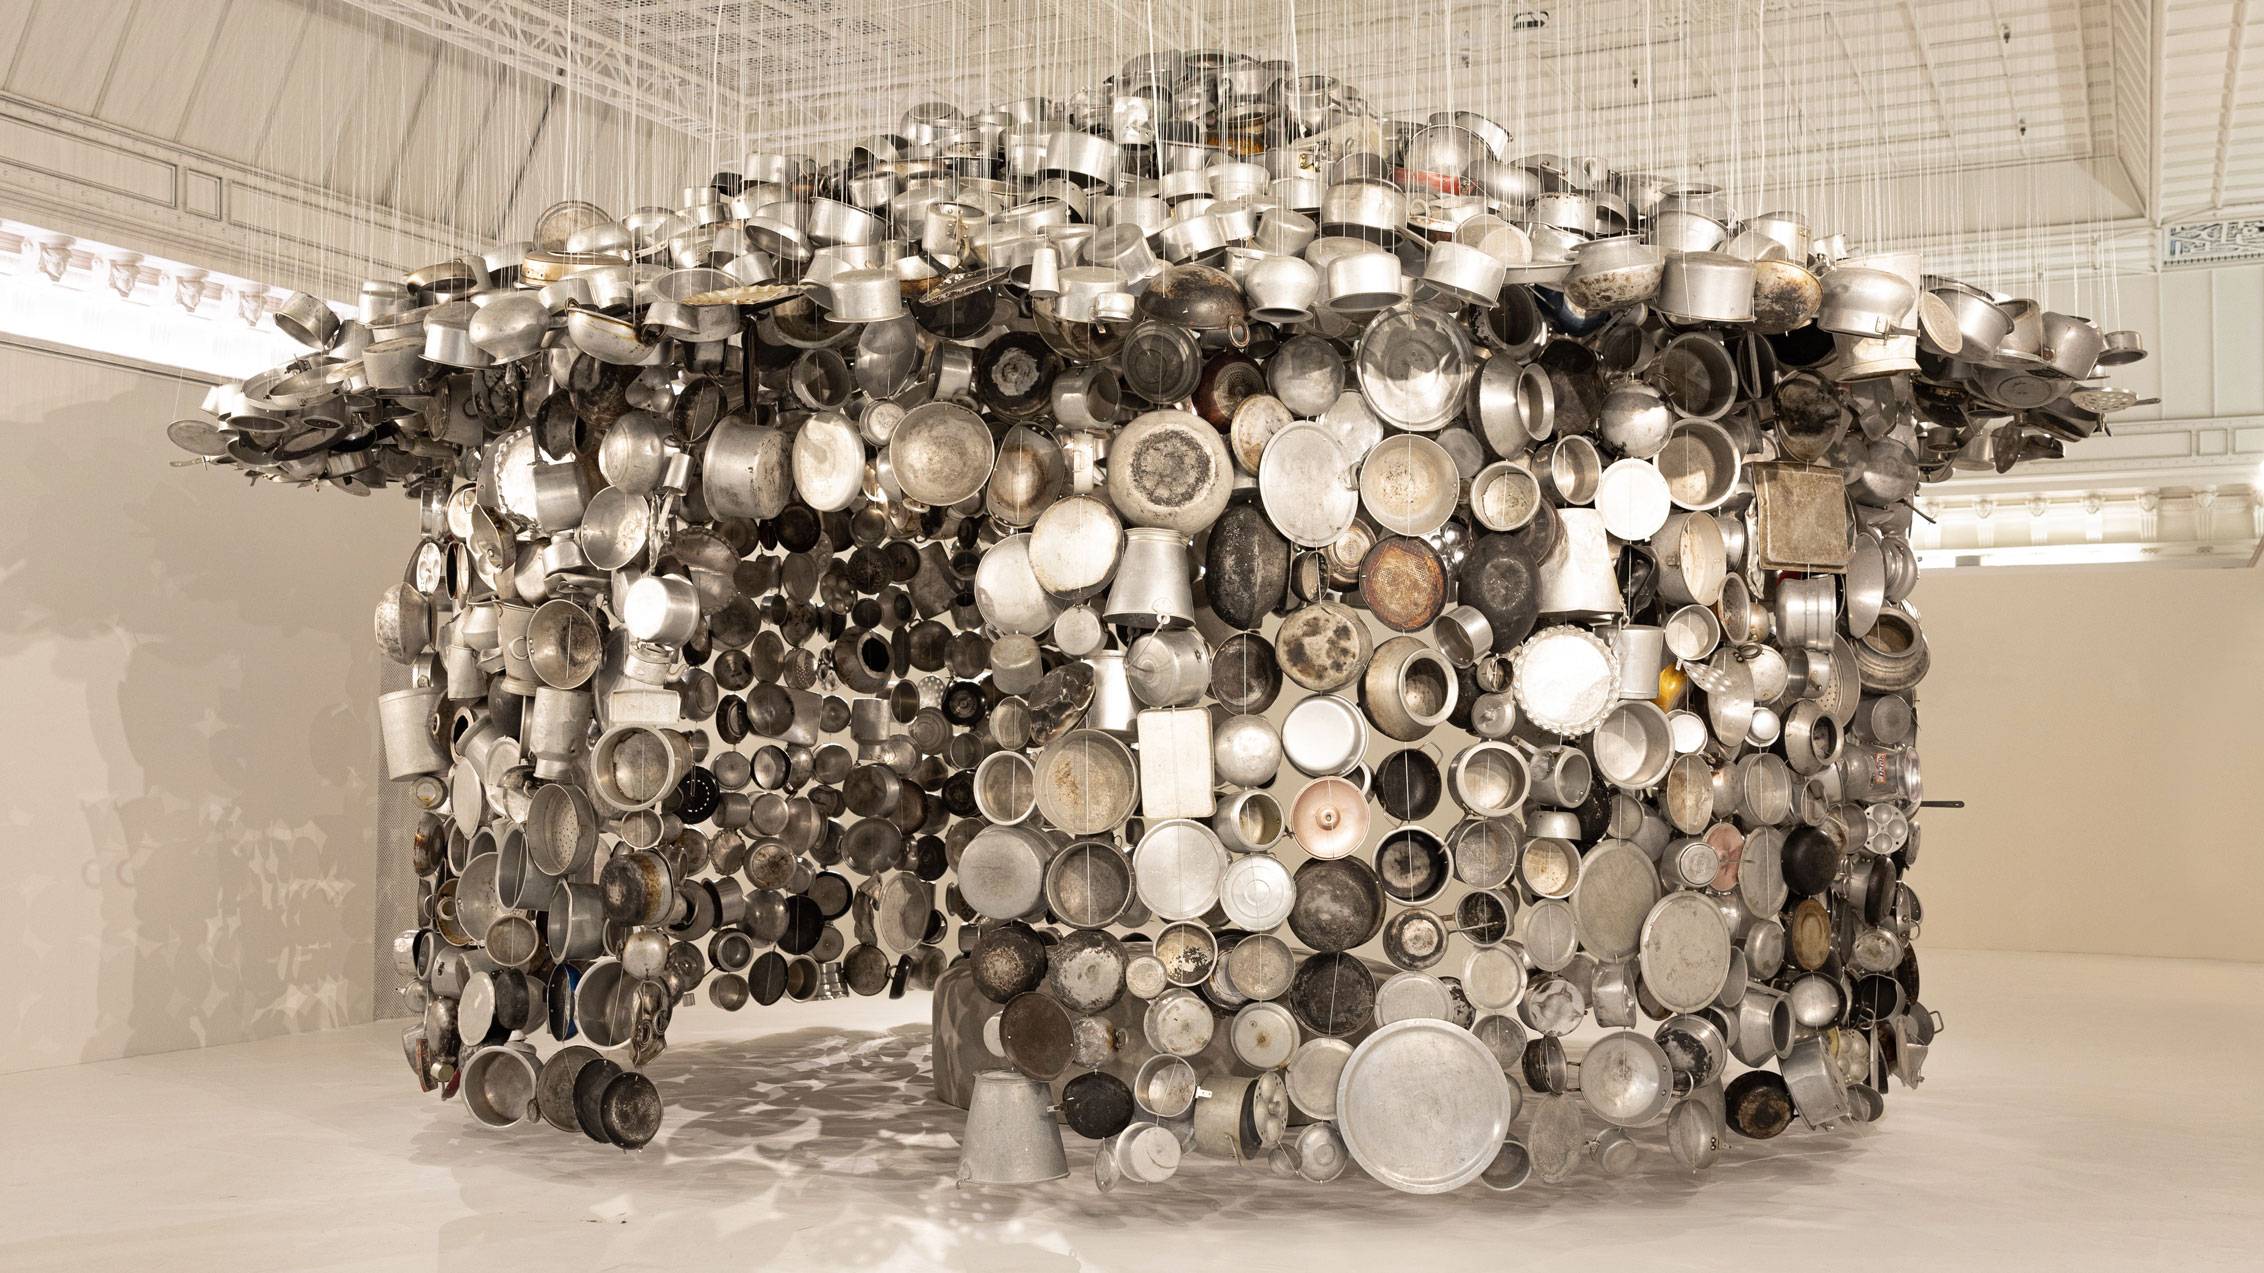 Artist Subodh Gupta pours a cascade of mirrors at Le Bon Marché